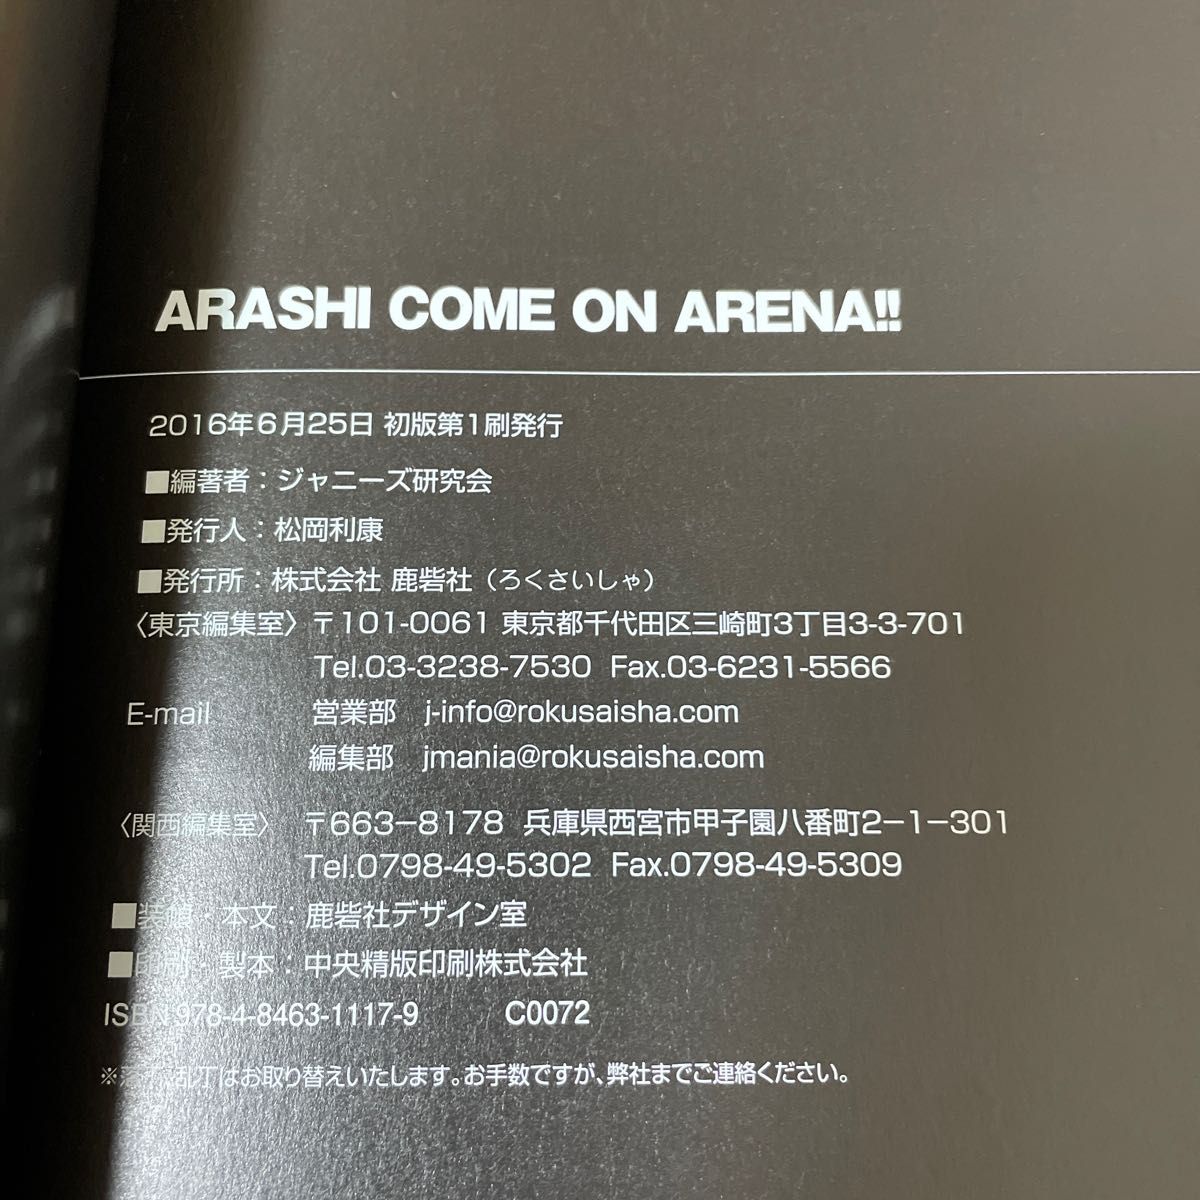 ARASHI COME ON ARENA!!  ARASHI ARENA TOUR 2016  "Japonism Show" 